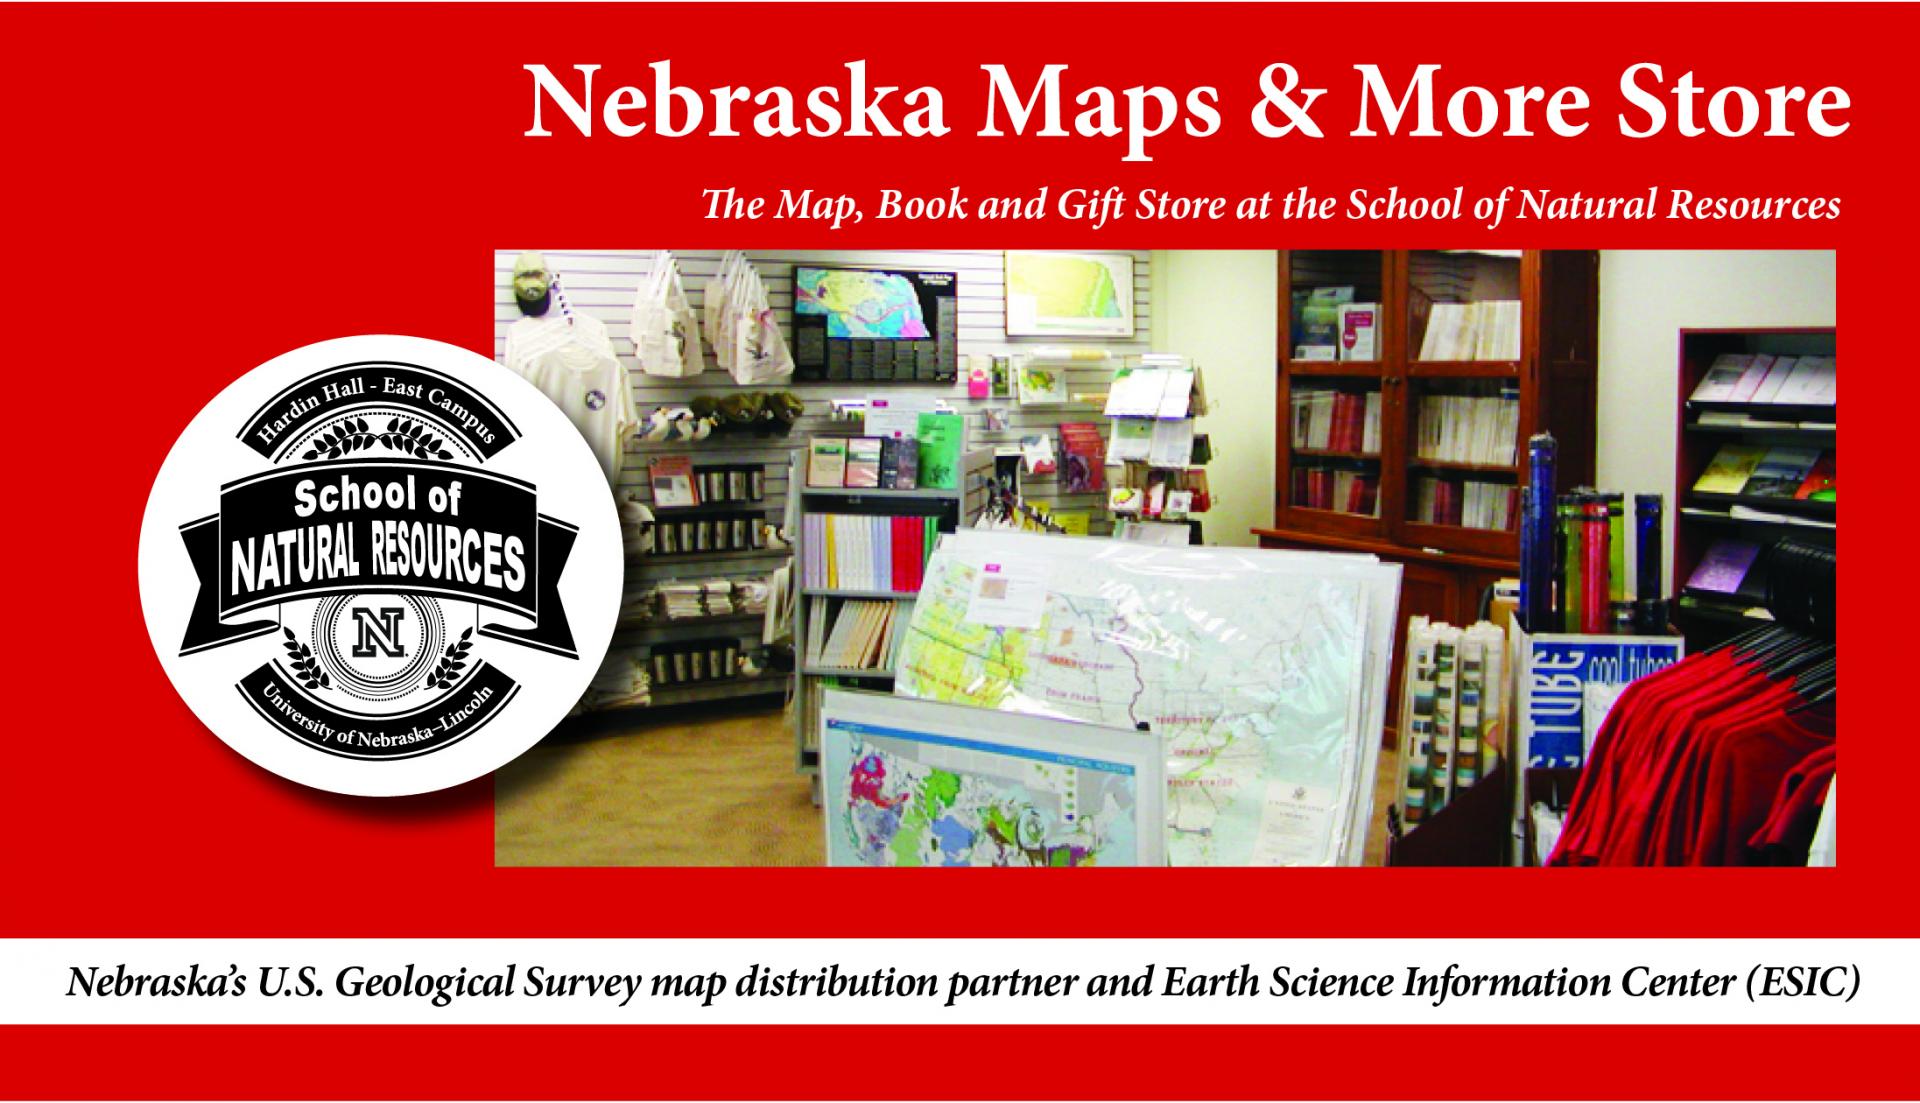 Nebraska Maps and More